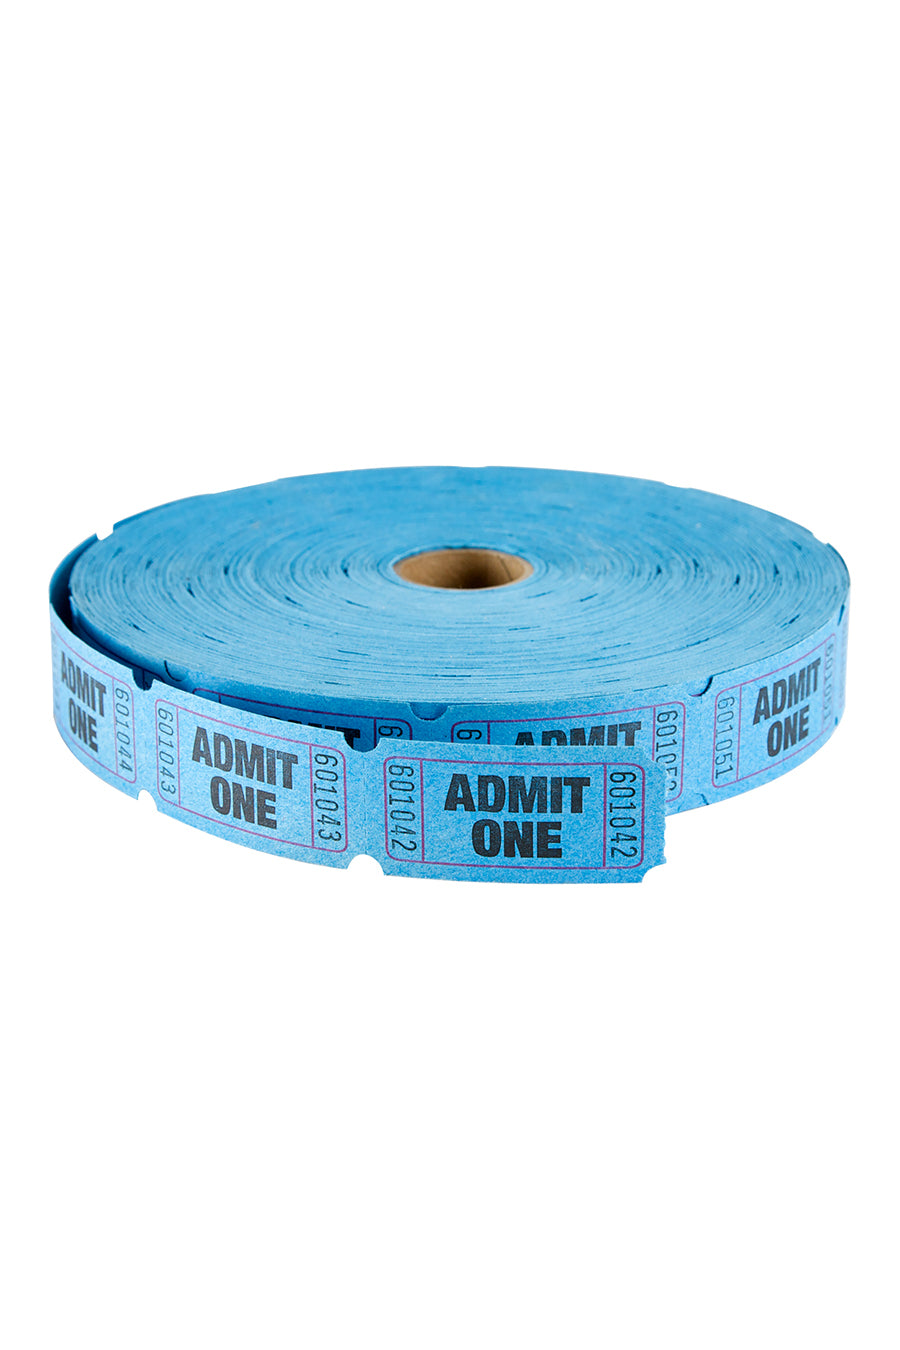 Single Ticket Roll, "Admit One", Blue, 2000 Tickets/Roll